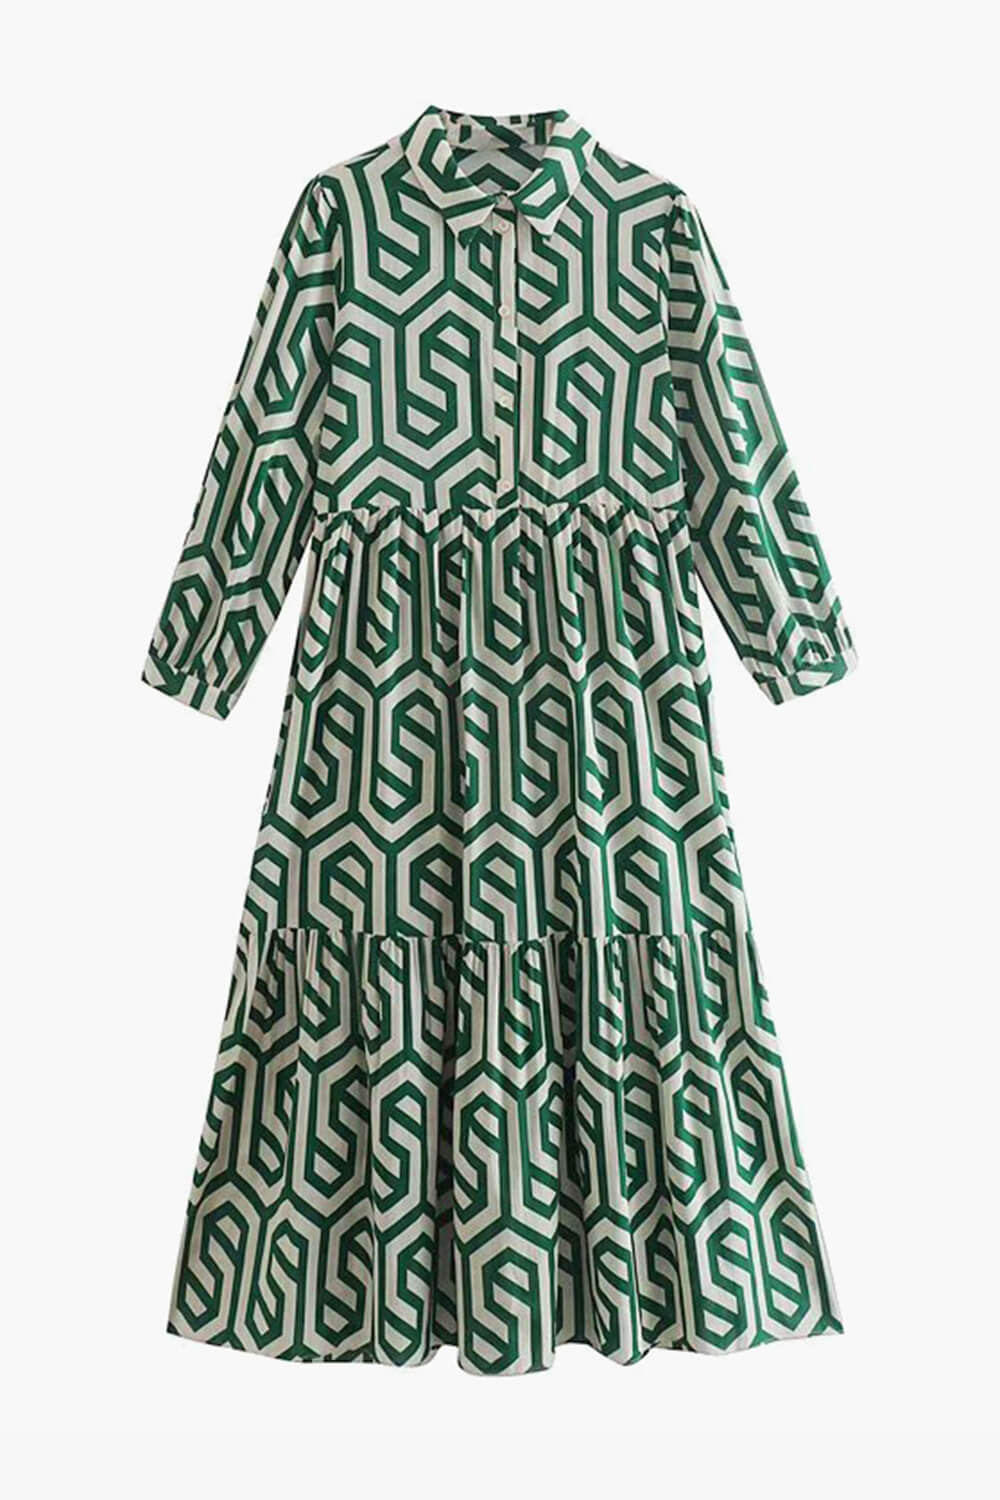 Weirdcore Retro Green Dress Geometric Pattern